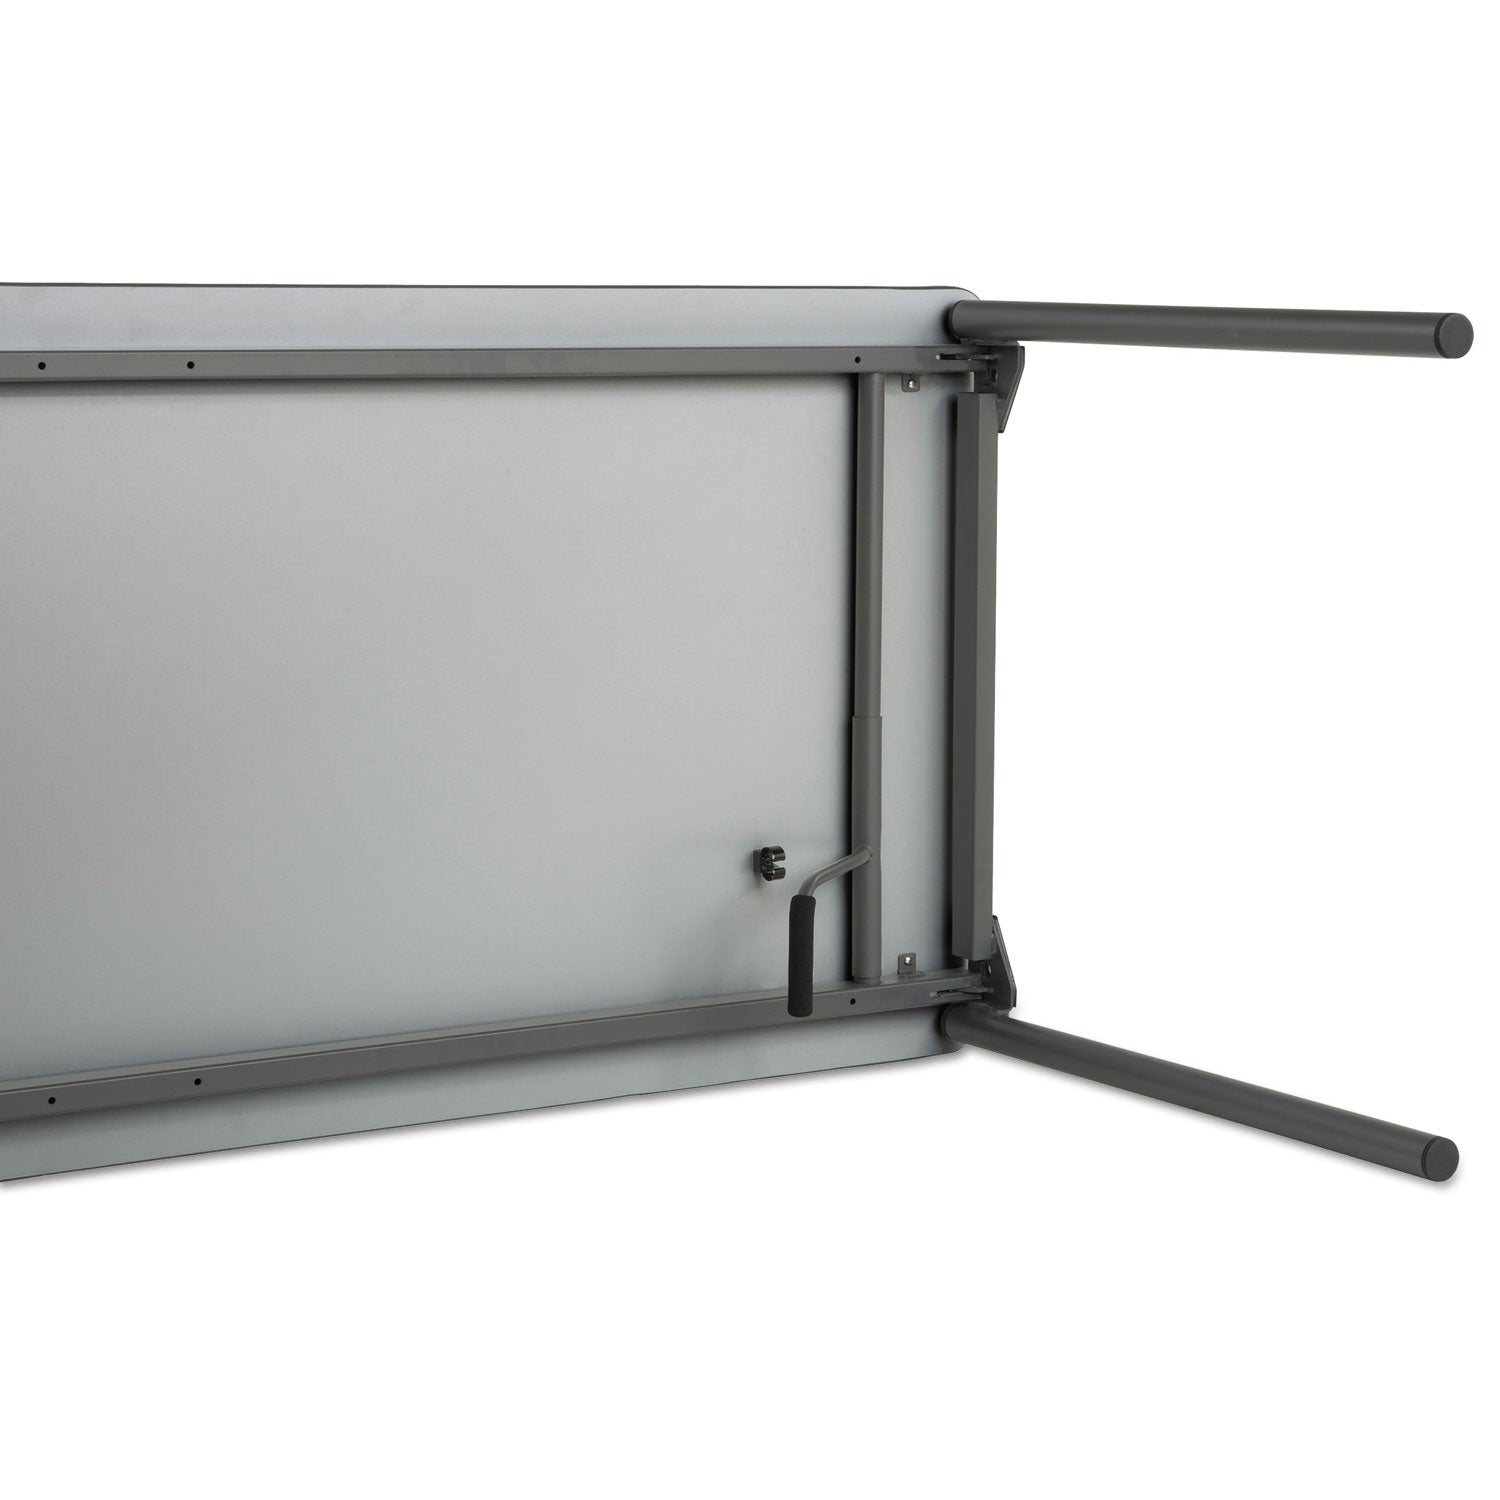 Maxx Legroom Wood Folding Table, Rectangular, 72" x 30" x 29.5", Gray/Charcoal - 